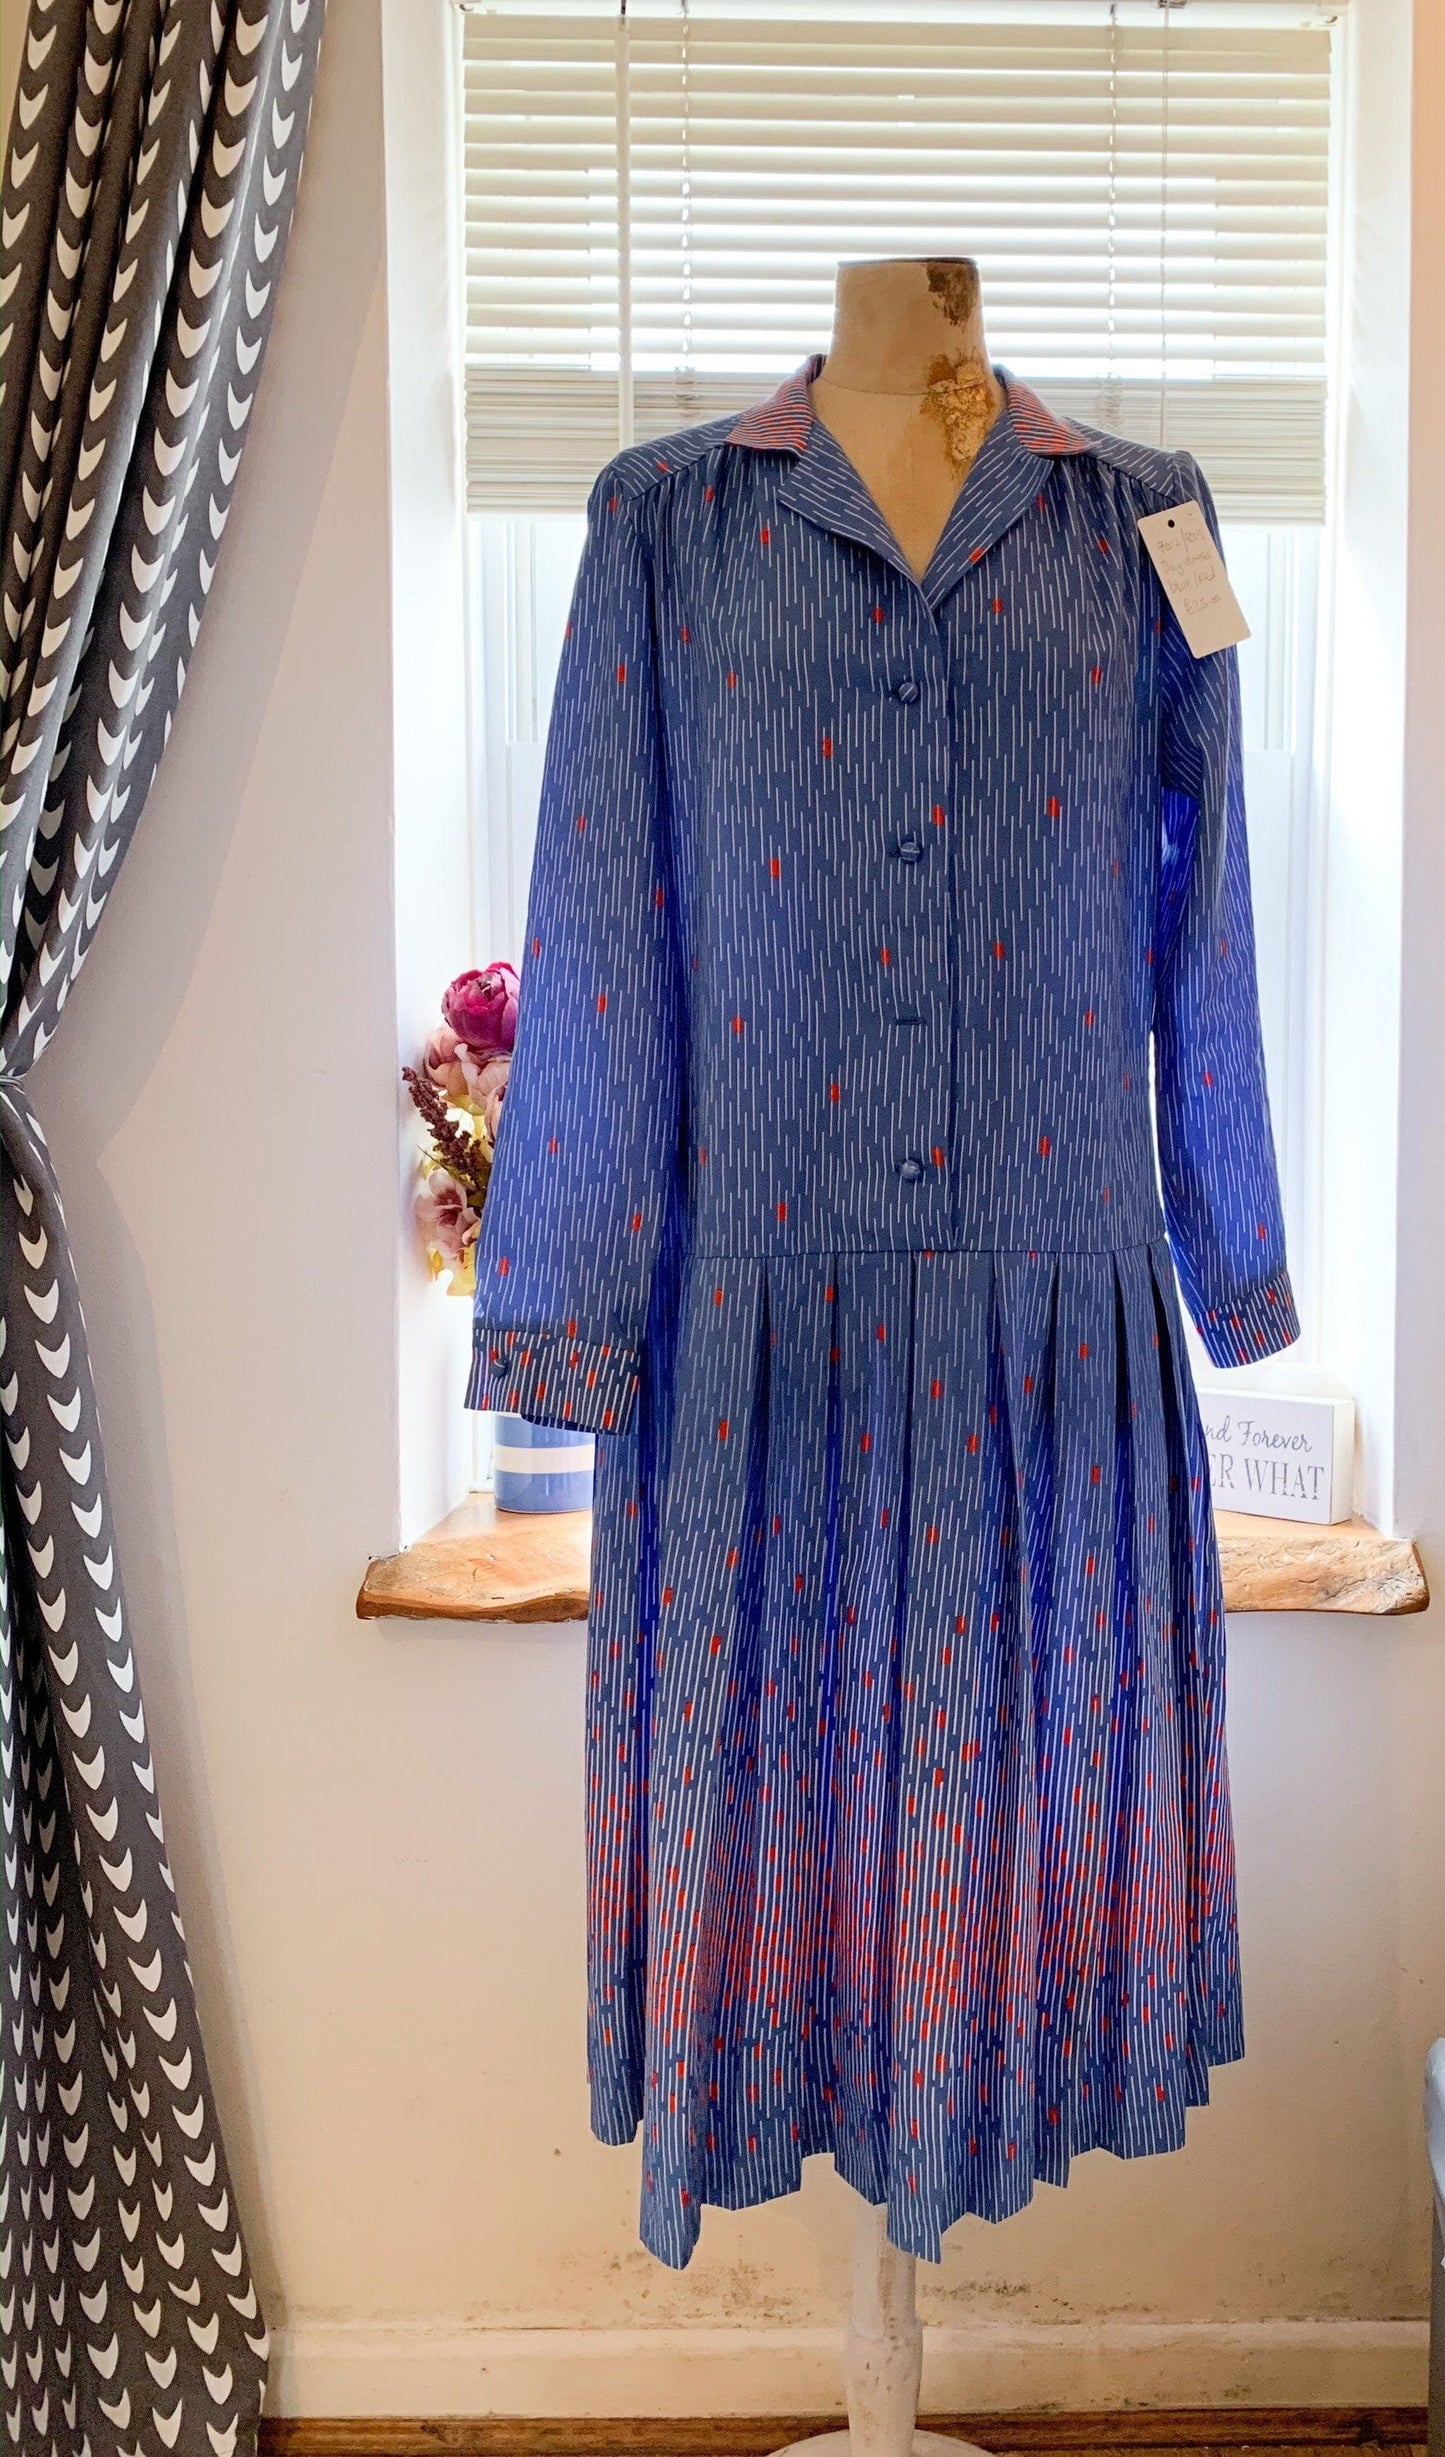 80s dress blue Vintage - Day Dress blue spot pattern pleated dress Rare Plus Size eu 42 size 16 blue and red voluptuous vintage